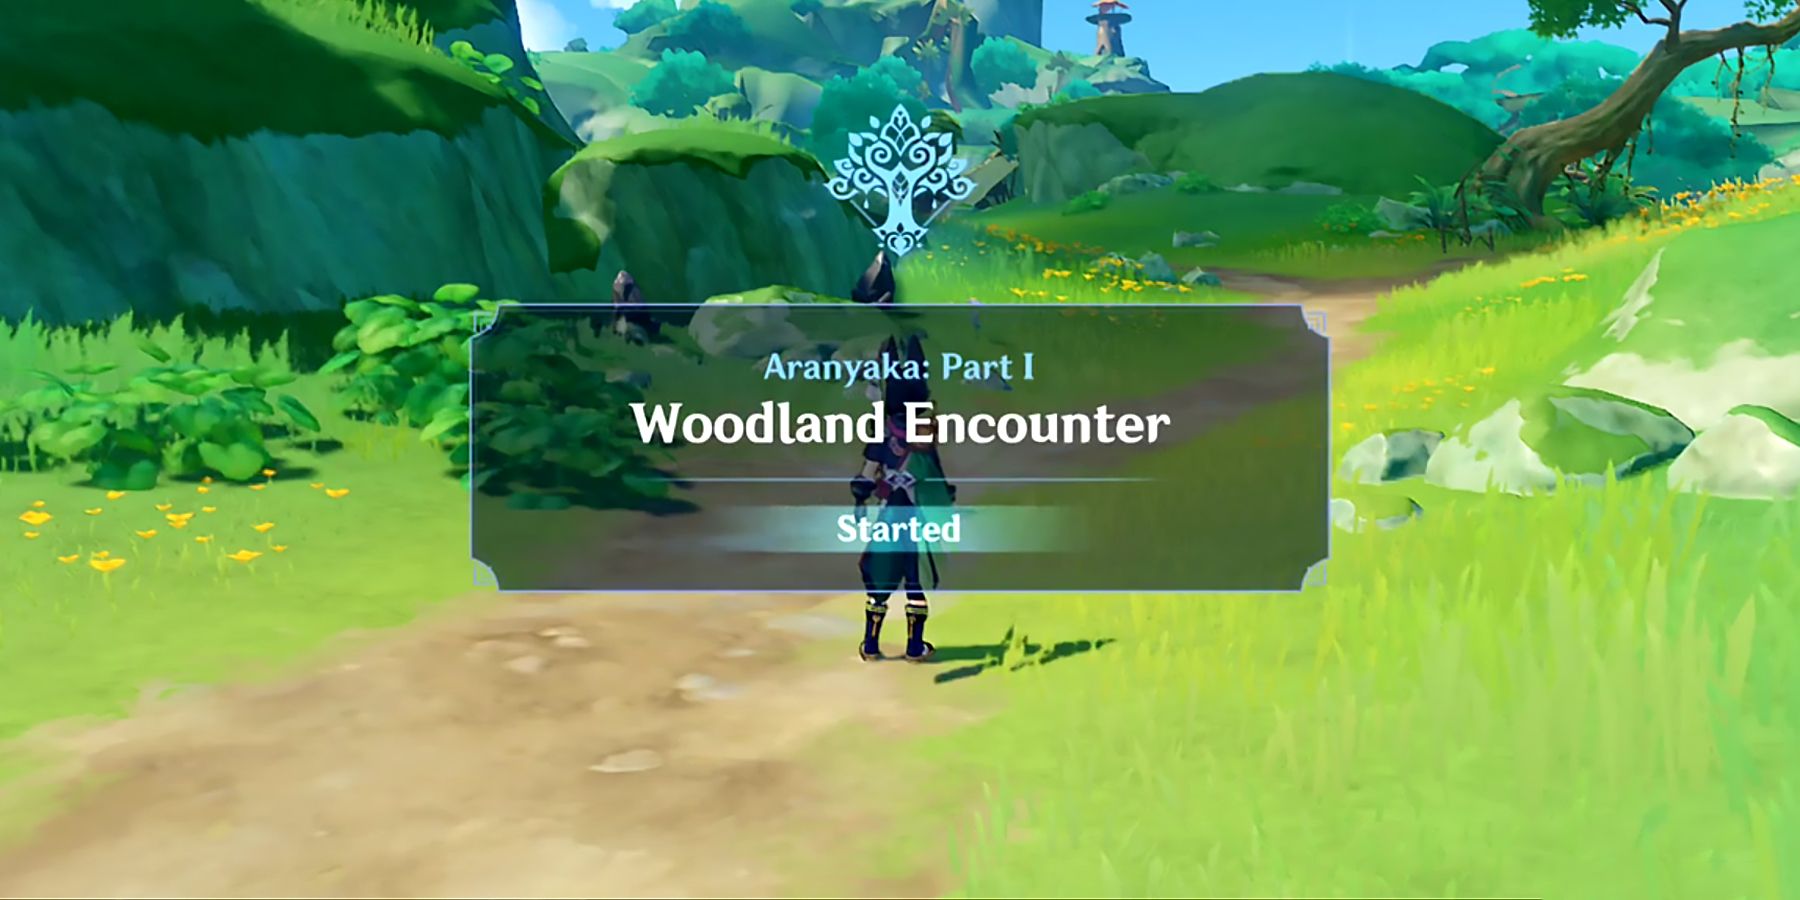 woodland encounter full completion walkthrough (aranyaka chapter 1) in genshin impact